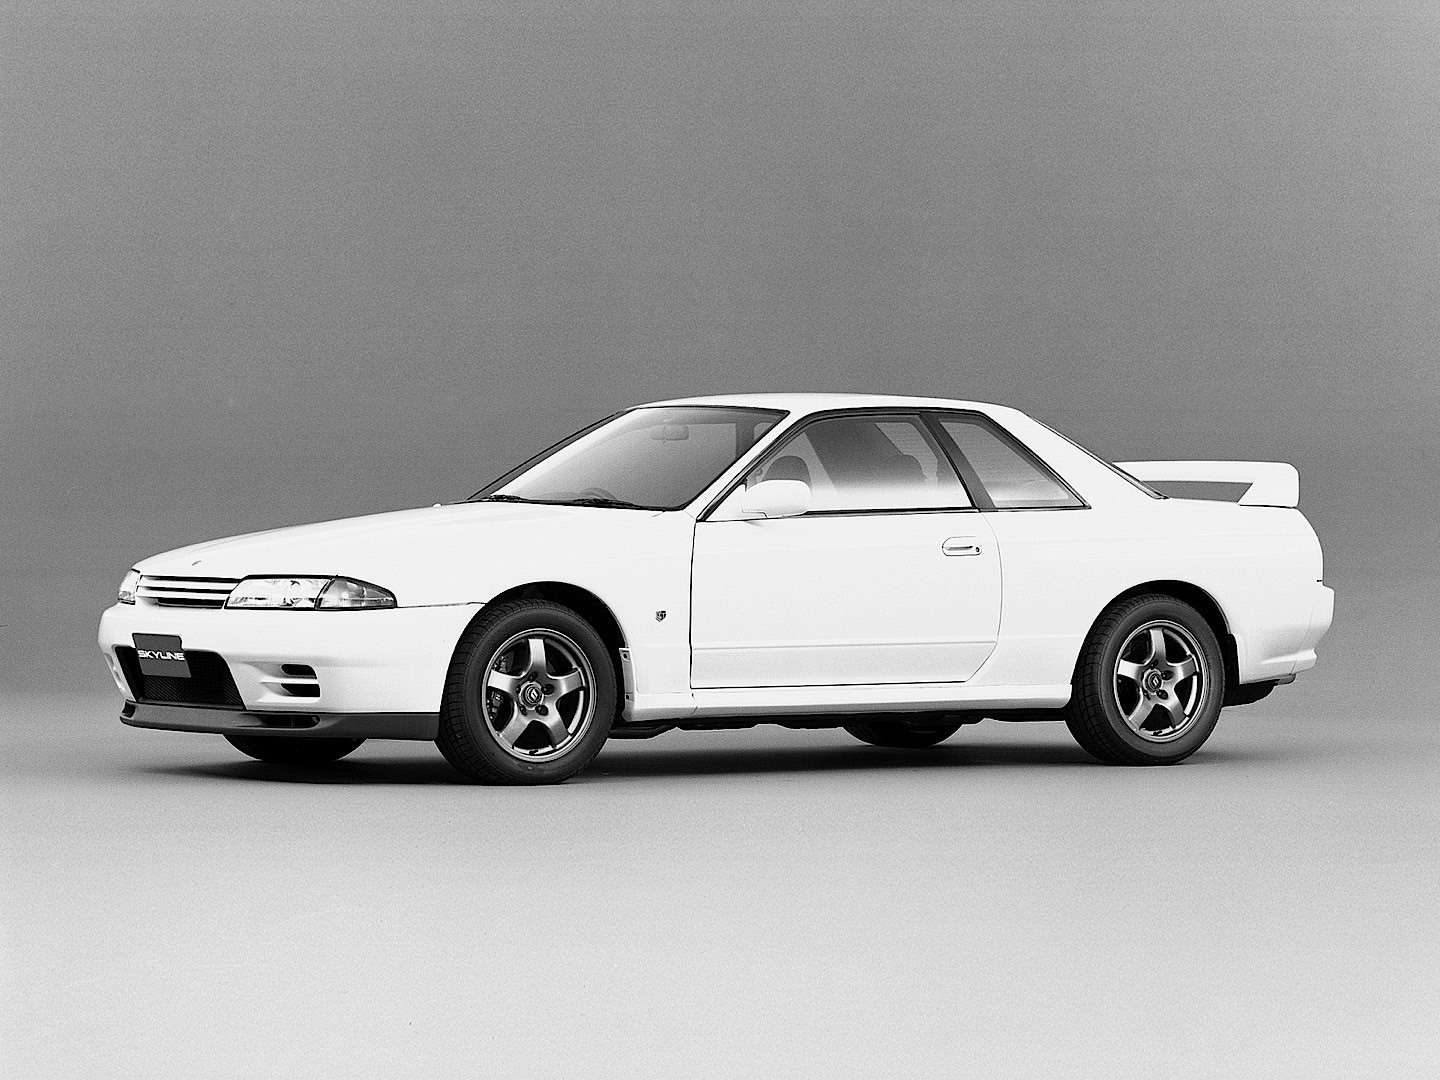 1994 Nissan skyline gtr review #9